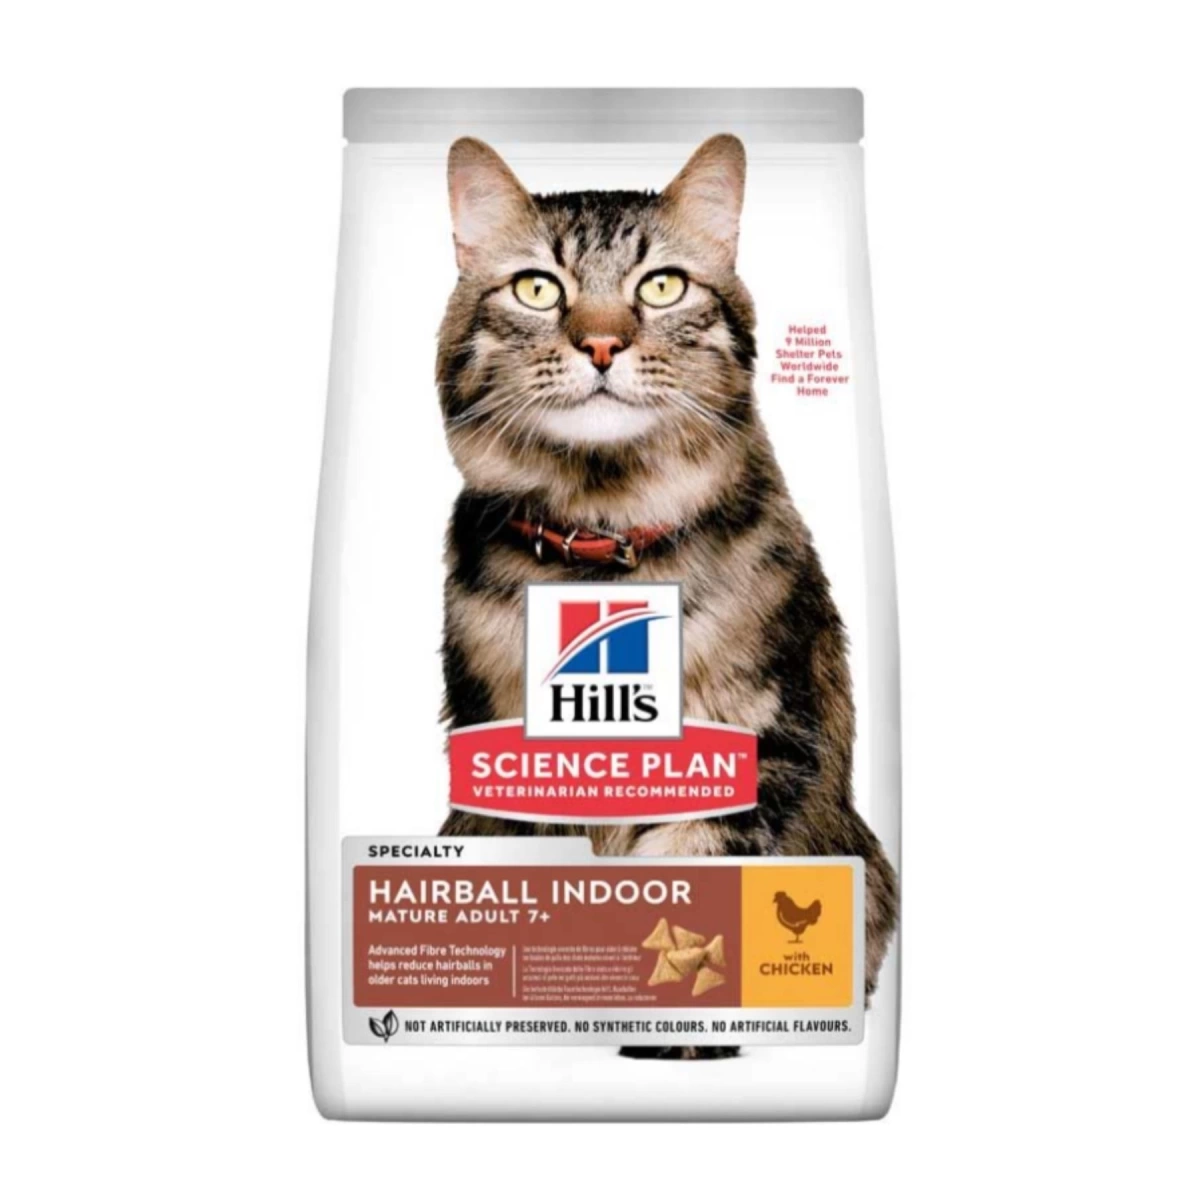 Hills Hairball Indoor Mature +7 Tüy Yumağı Önleyici Yaşlı Kedi Maması Tavuklu 1.5 Kg